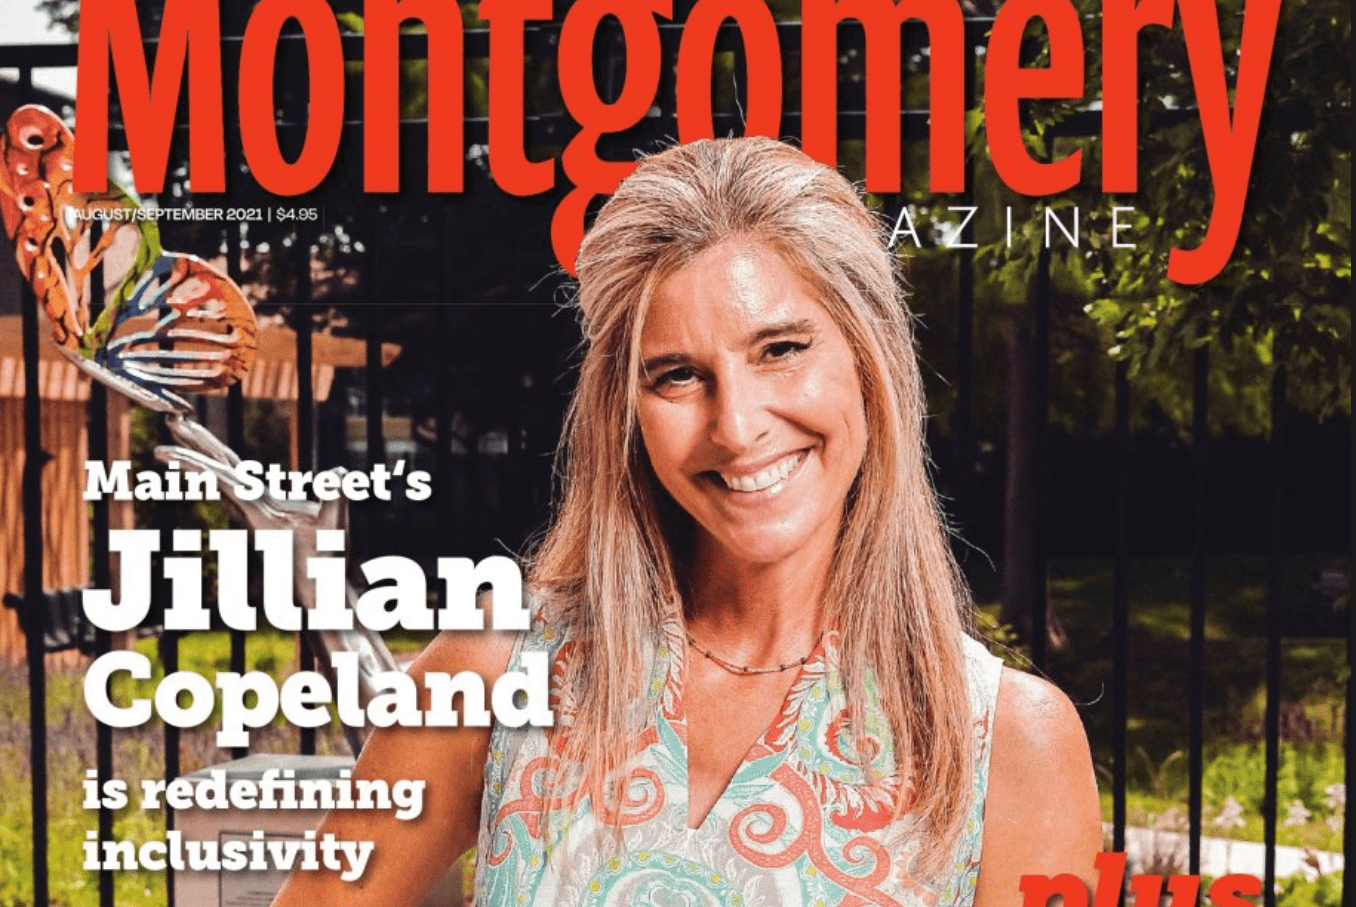 Jillian Copeland on cover of Montgomery Magazine